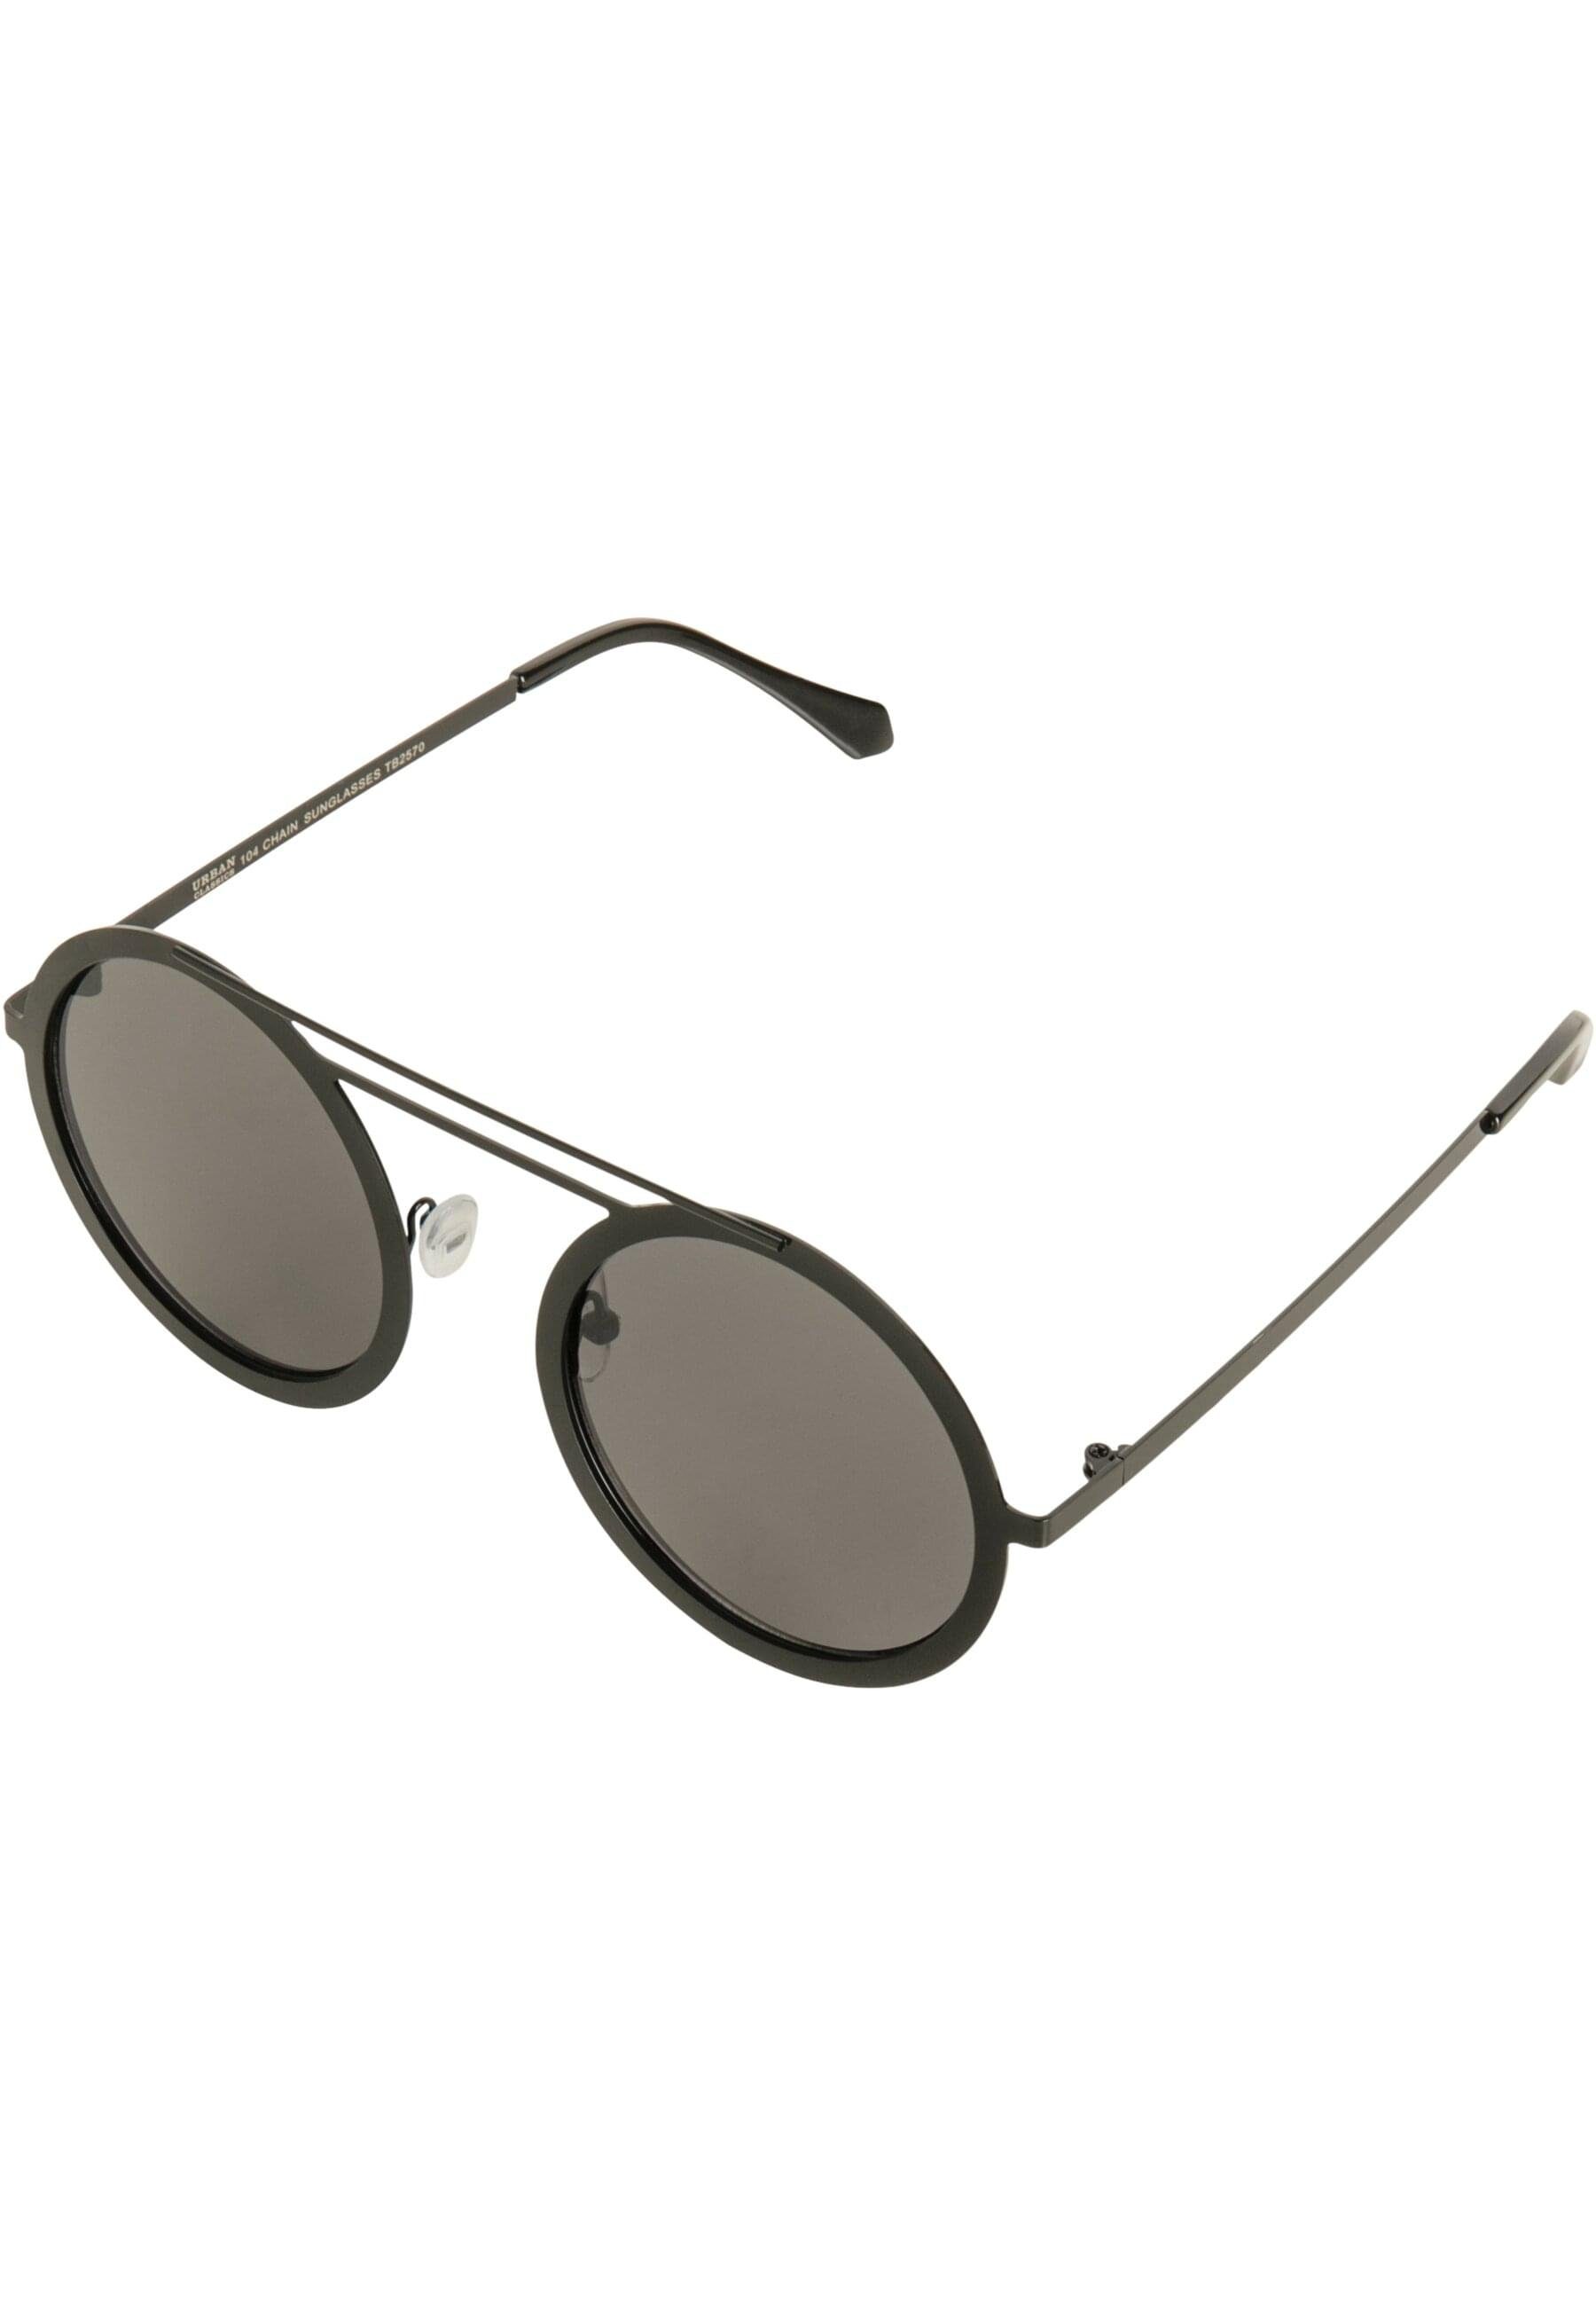 URBAN CLASSICS Sonnenbrille 104 Unisex black/black Sunglasses Chain